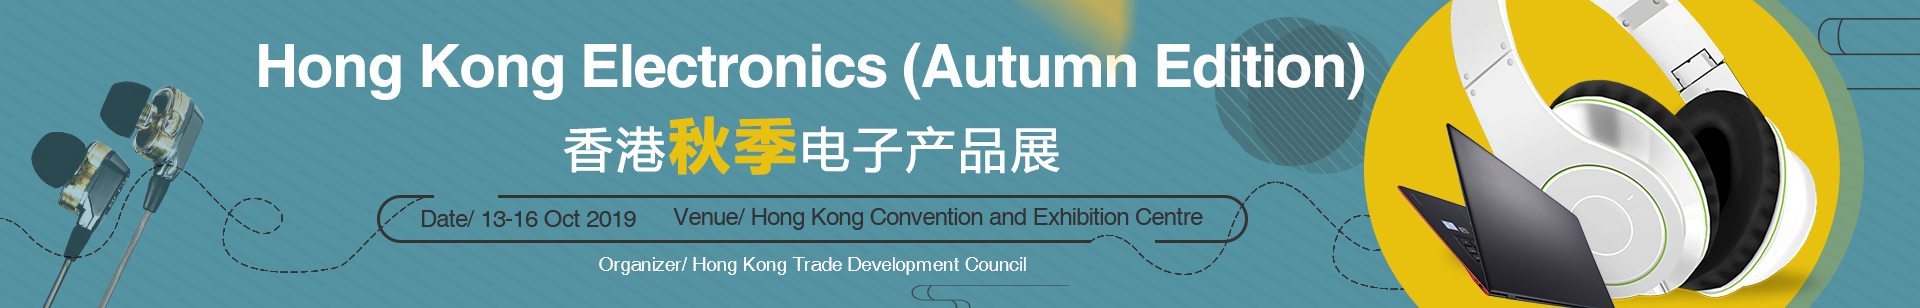 Hong Kong Electronics (Autumn Edition)